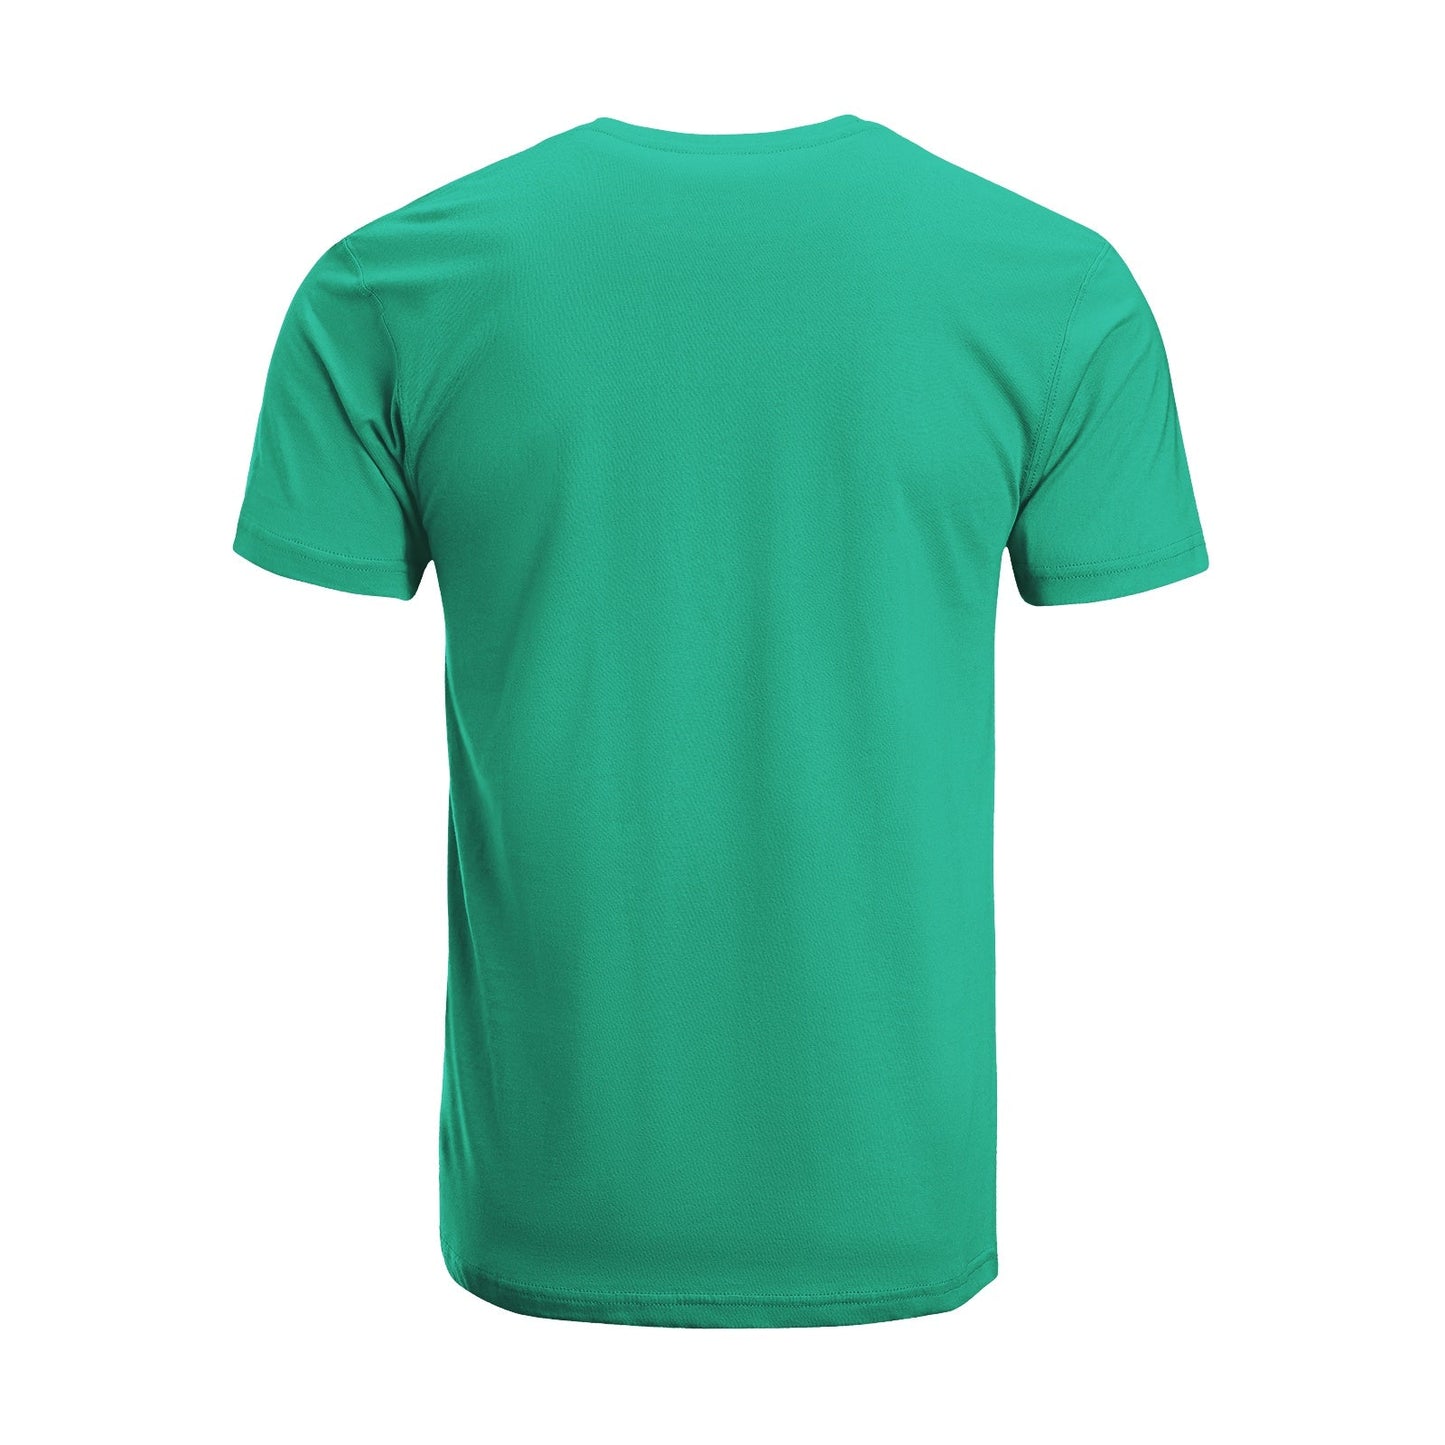 Unisex Short Sleeve Crew Neck Cotton Jersey T-Shirt USA 20